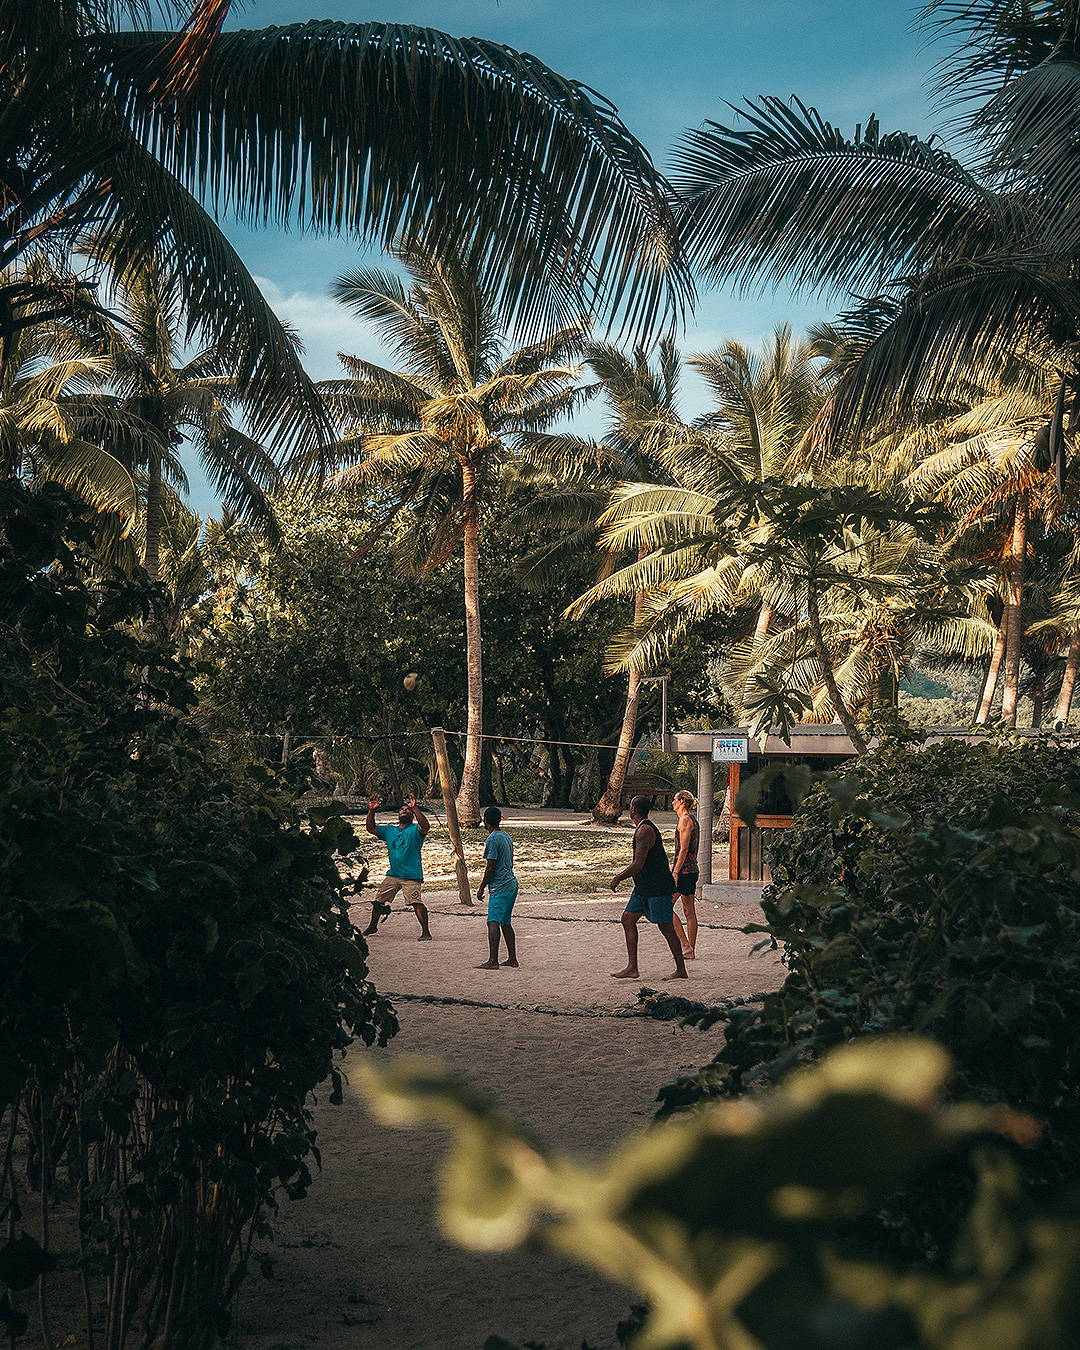 People playing ball on the island paradise of Fiji.